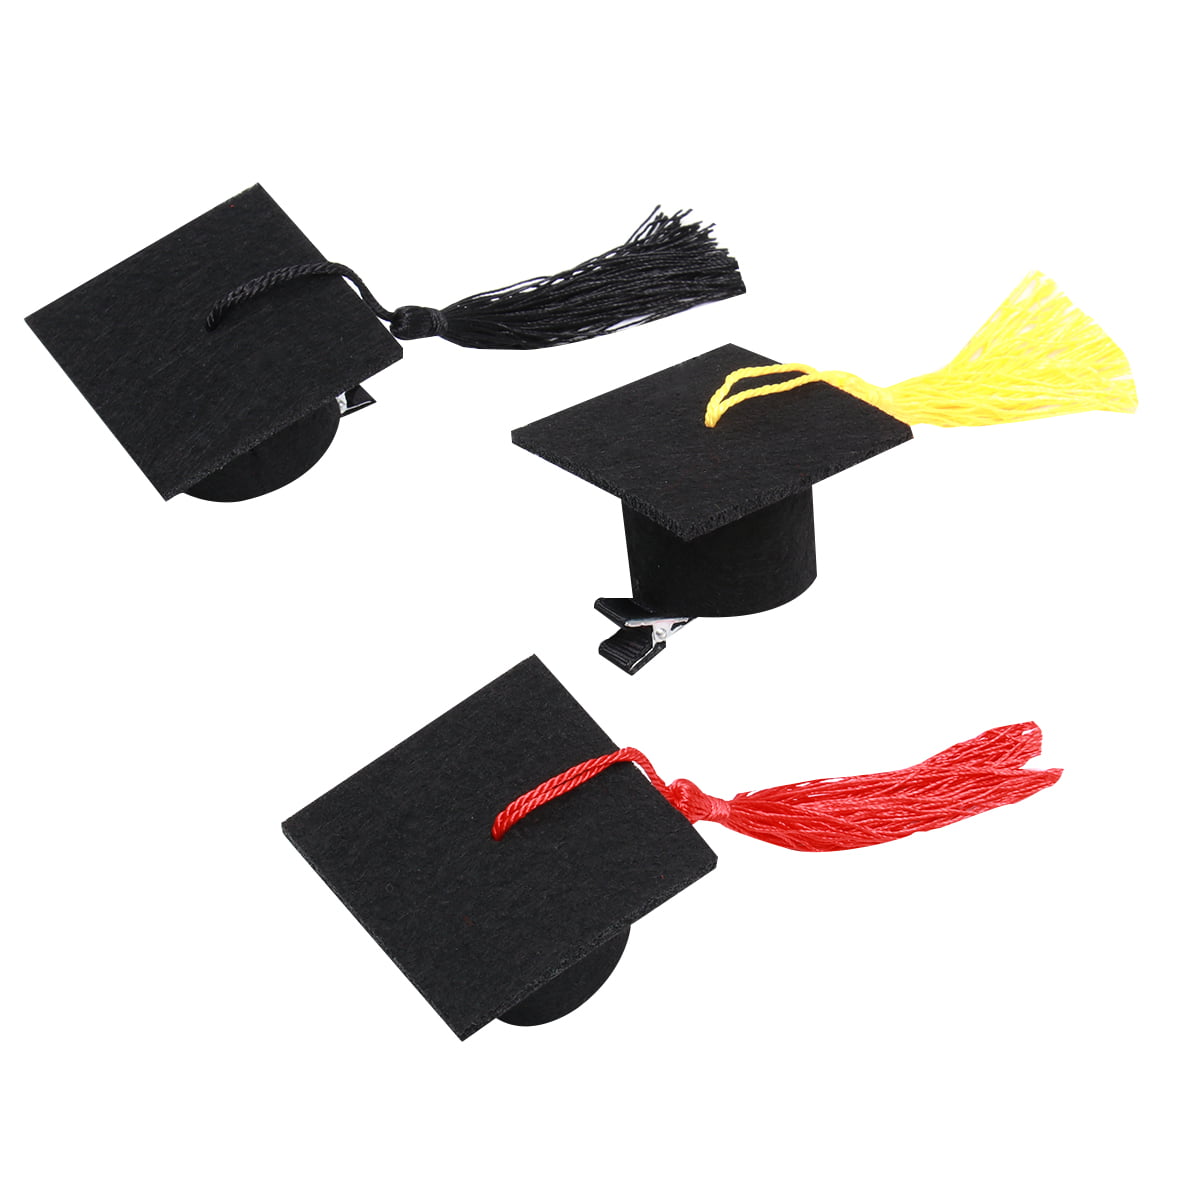 3pcs Mini Doctoral Hair Clip Graduation Hat Hairpins Tassel Stereoscopic